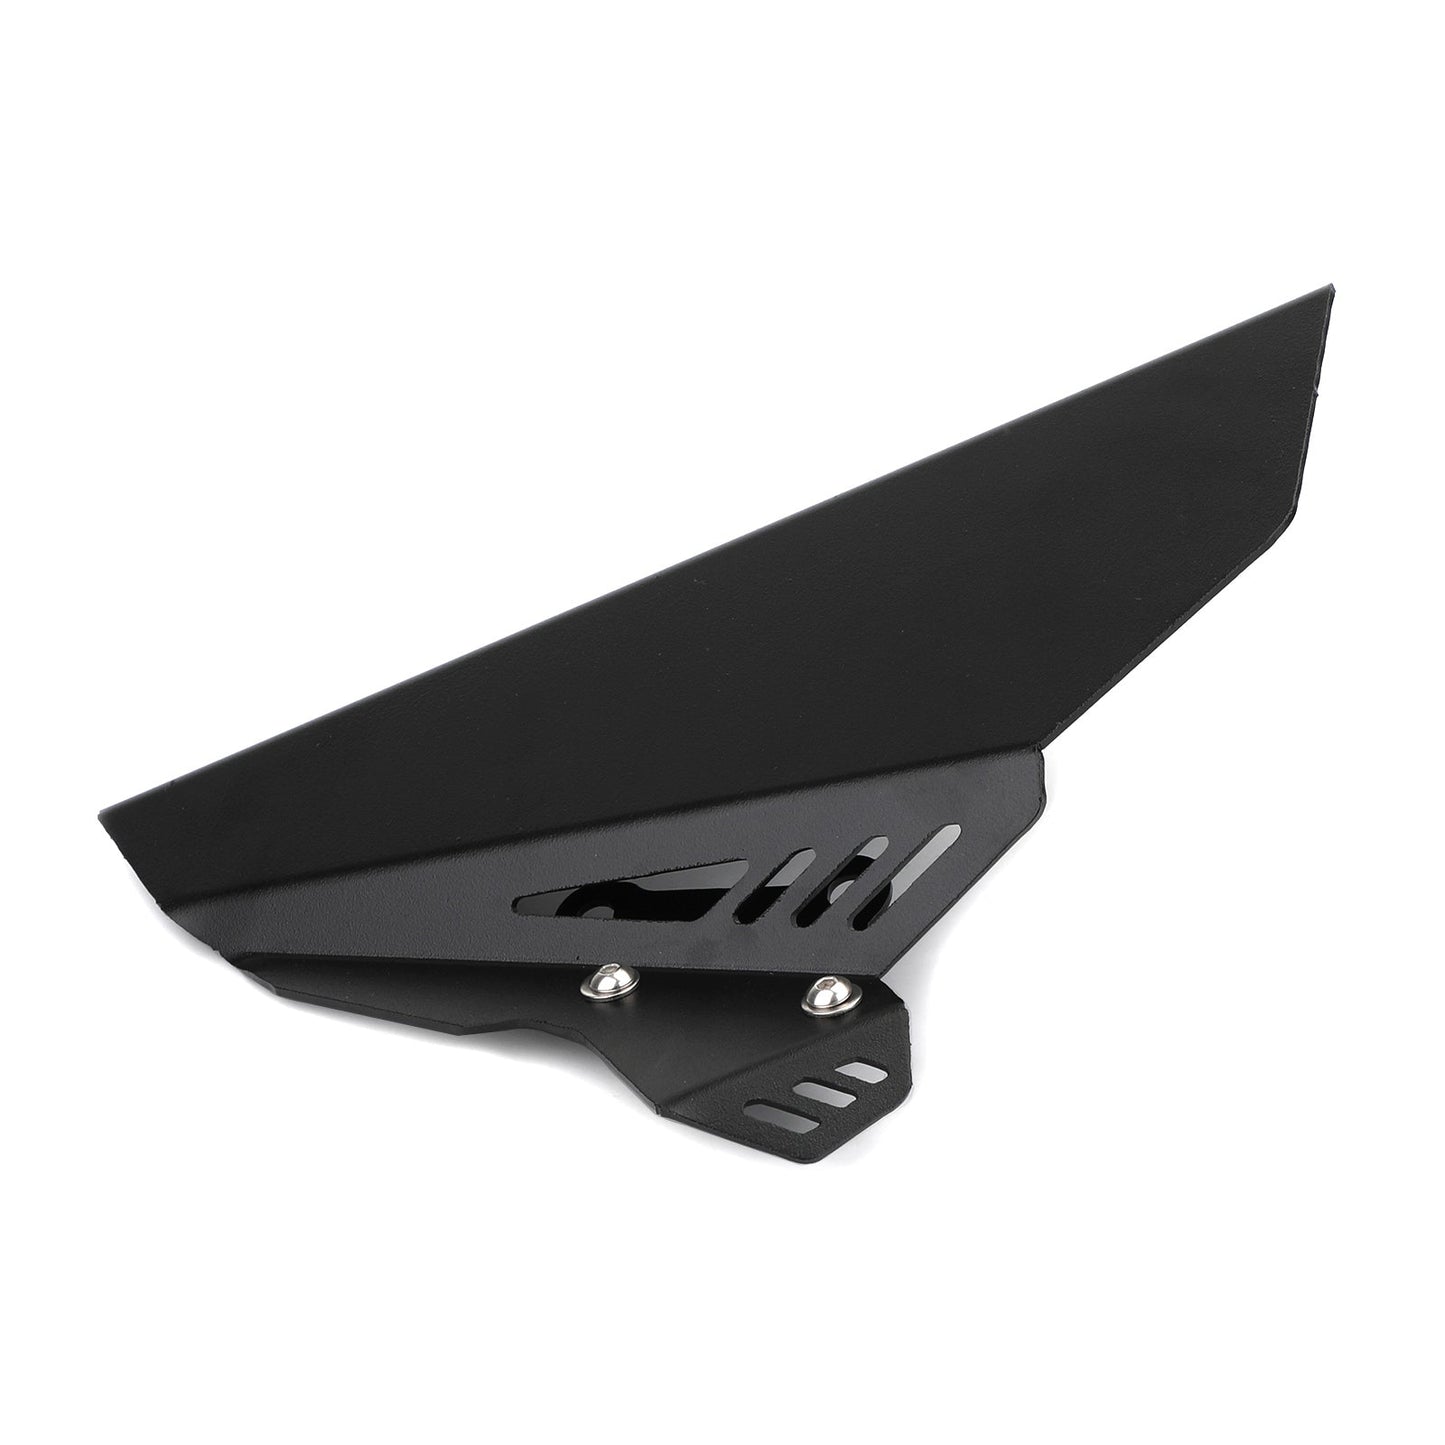 Windscreen Windshield Shield Protector Black For YAMAHA FZ 09 MT 09 2017-2020